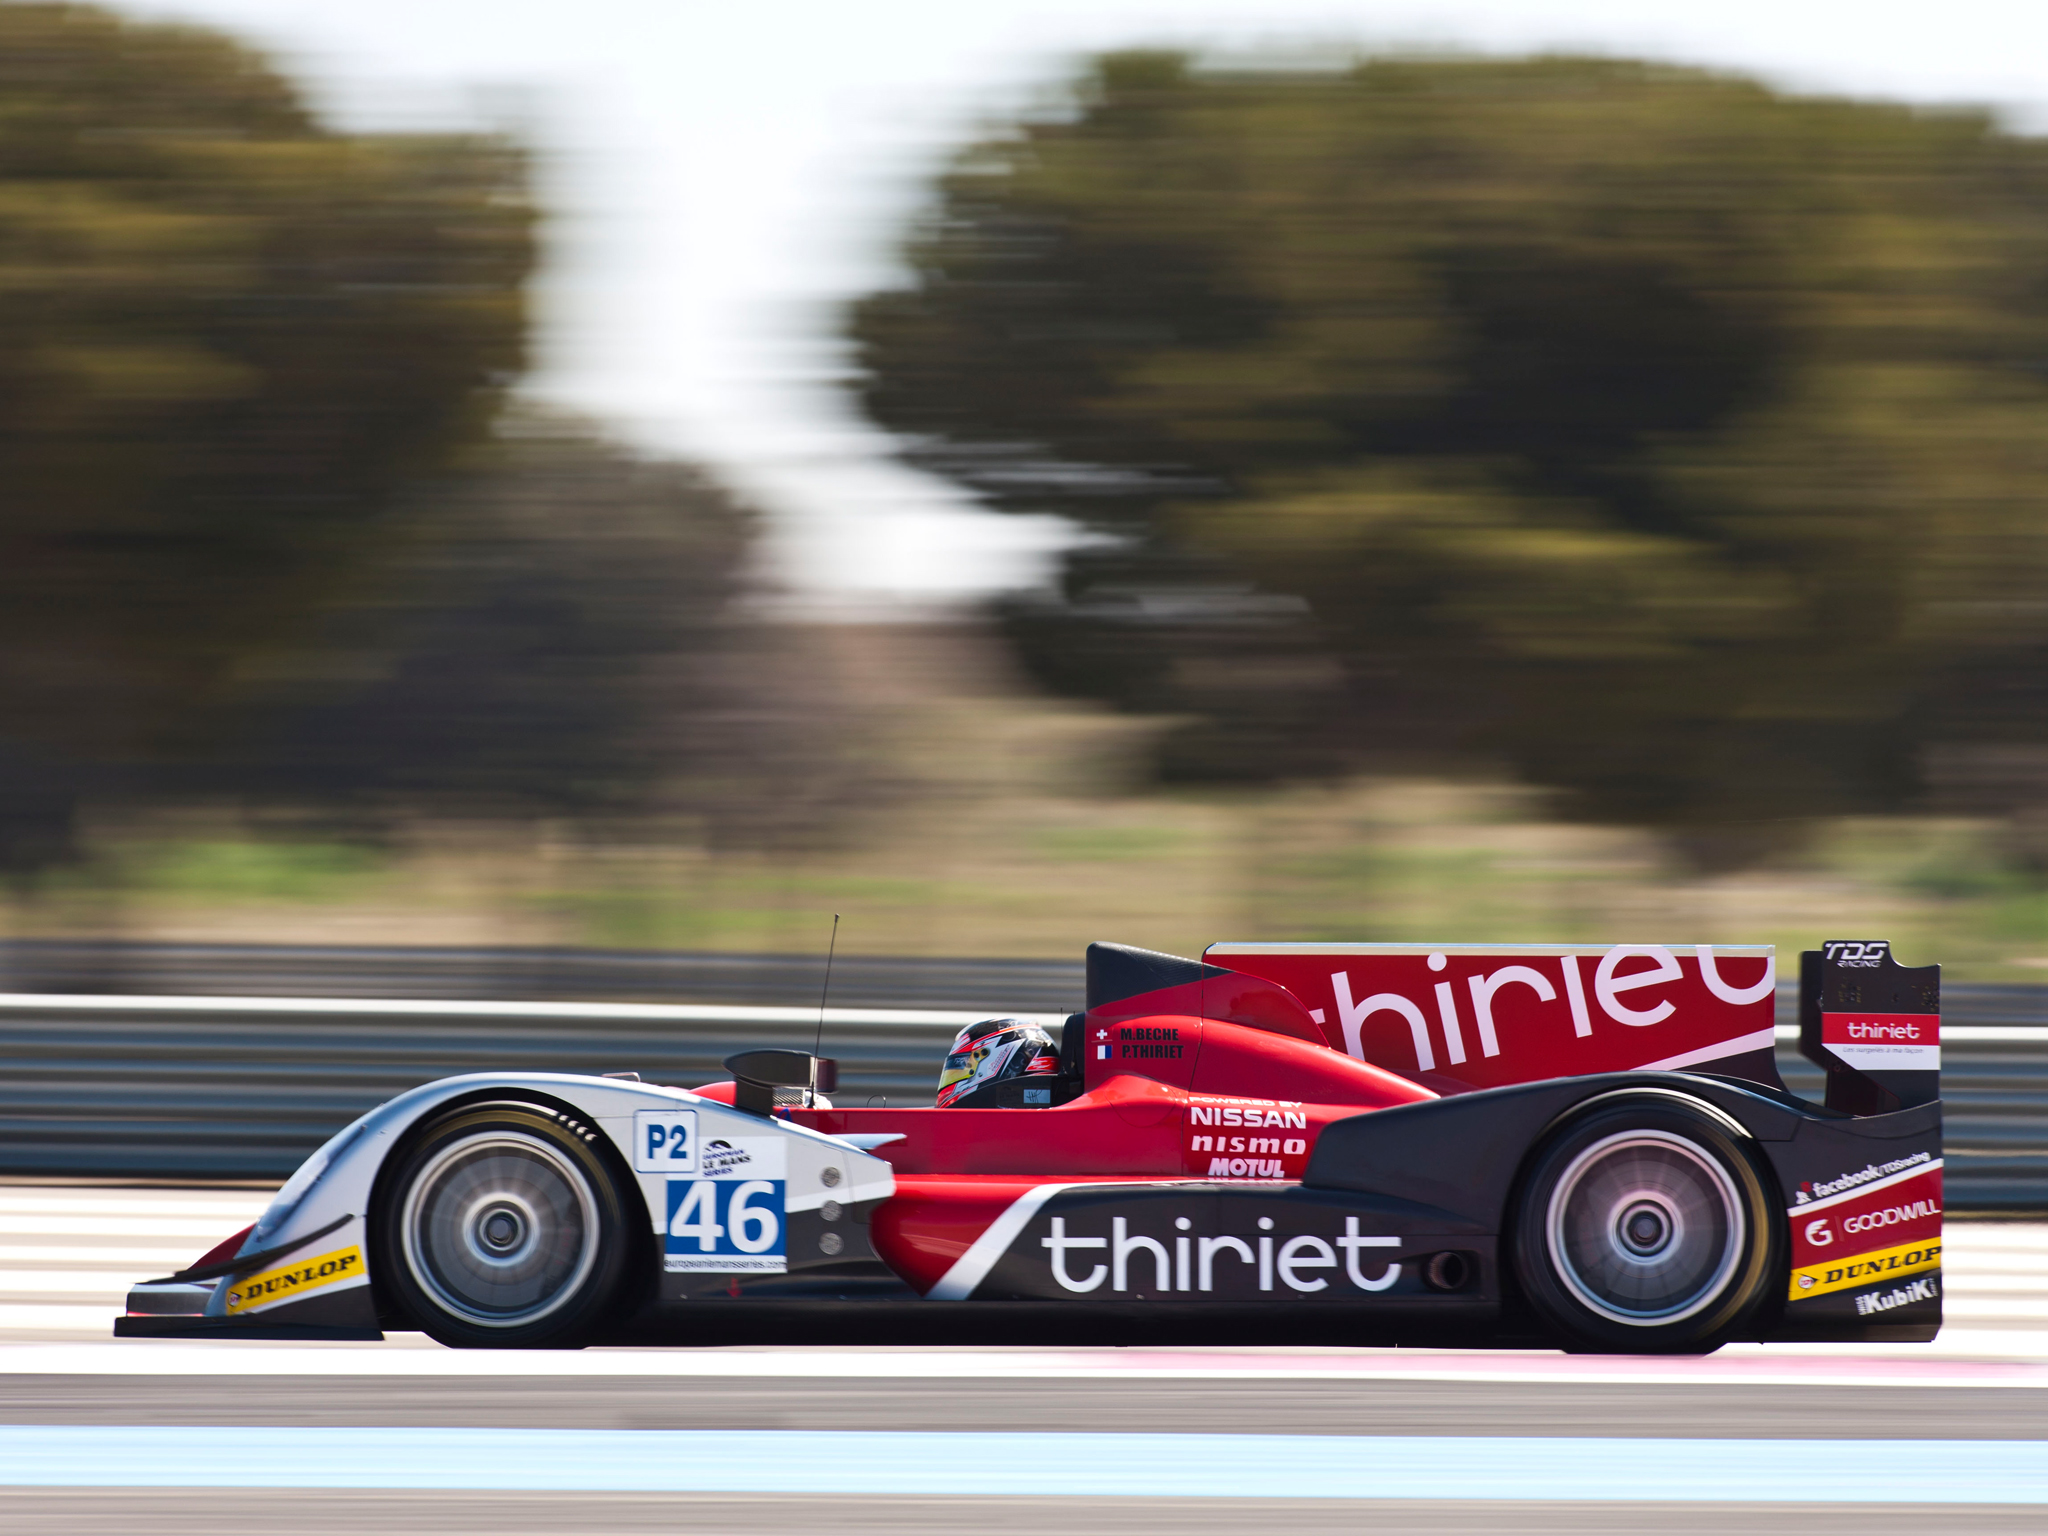 2011, Oreca, 03, Nissan, Race, Racing Wallpaper